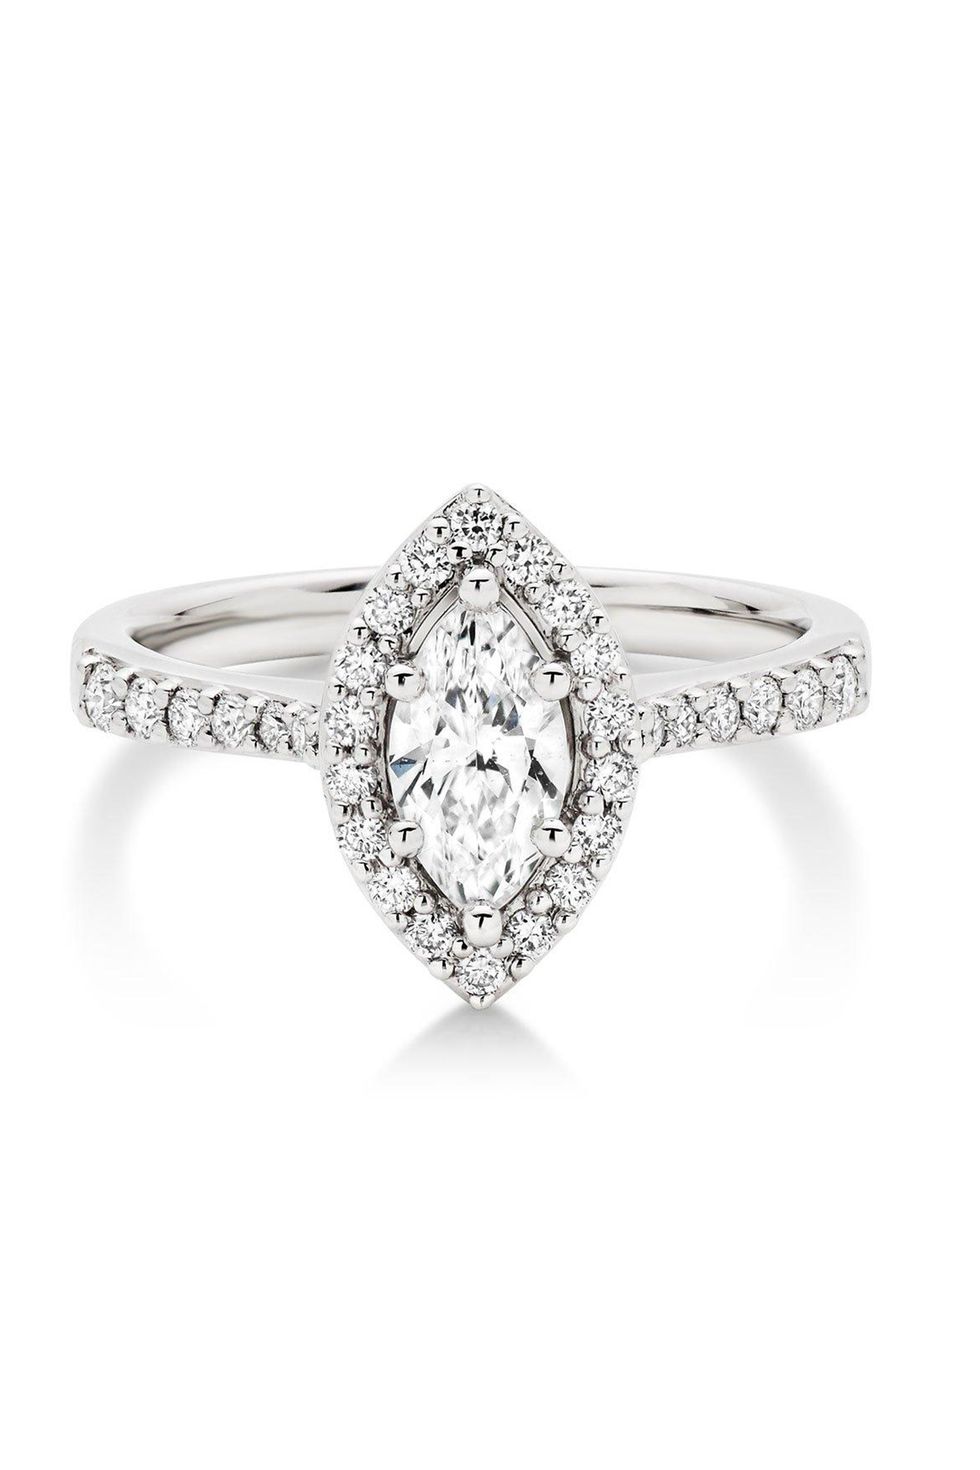 Ring, Jewellery, Engagement ring, Pre-engagement ring, Fashion accessory, Diamond, Gemstone, Platinum, Body jewelry, Metal, 